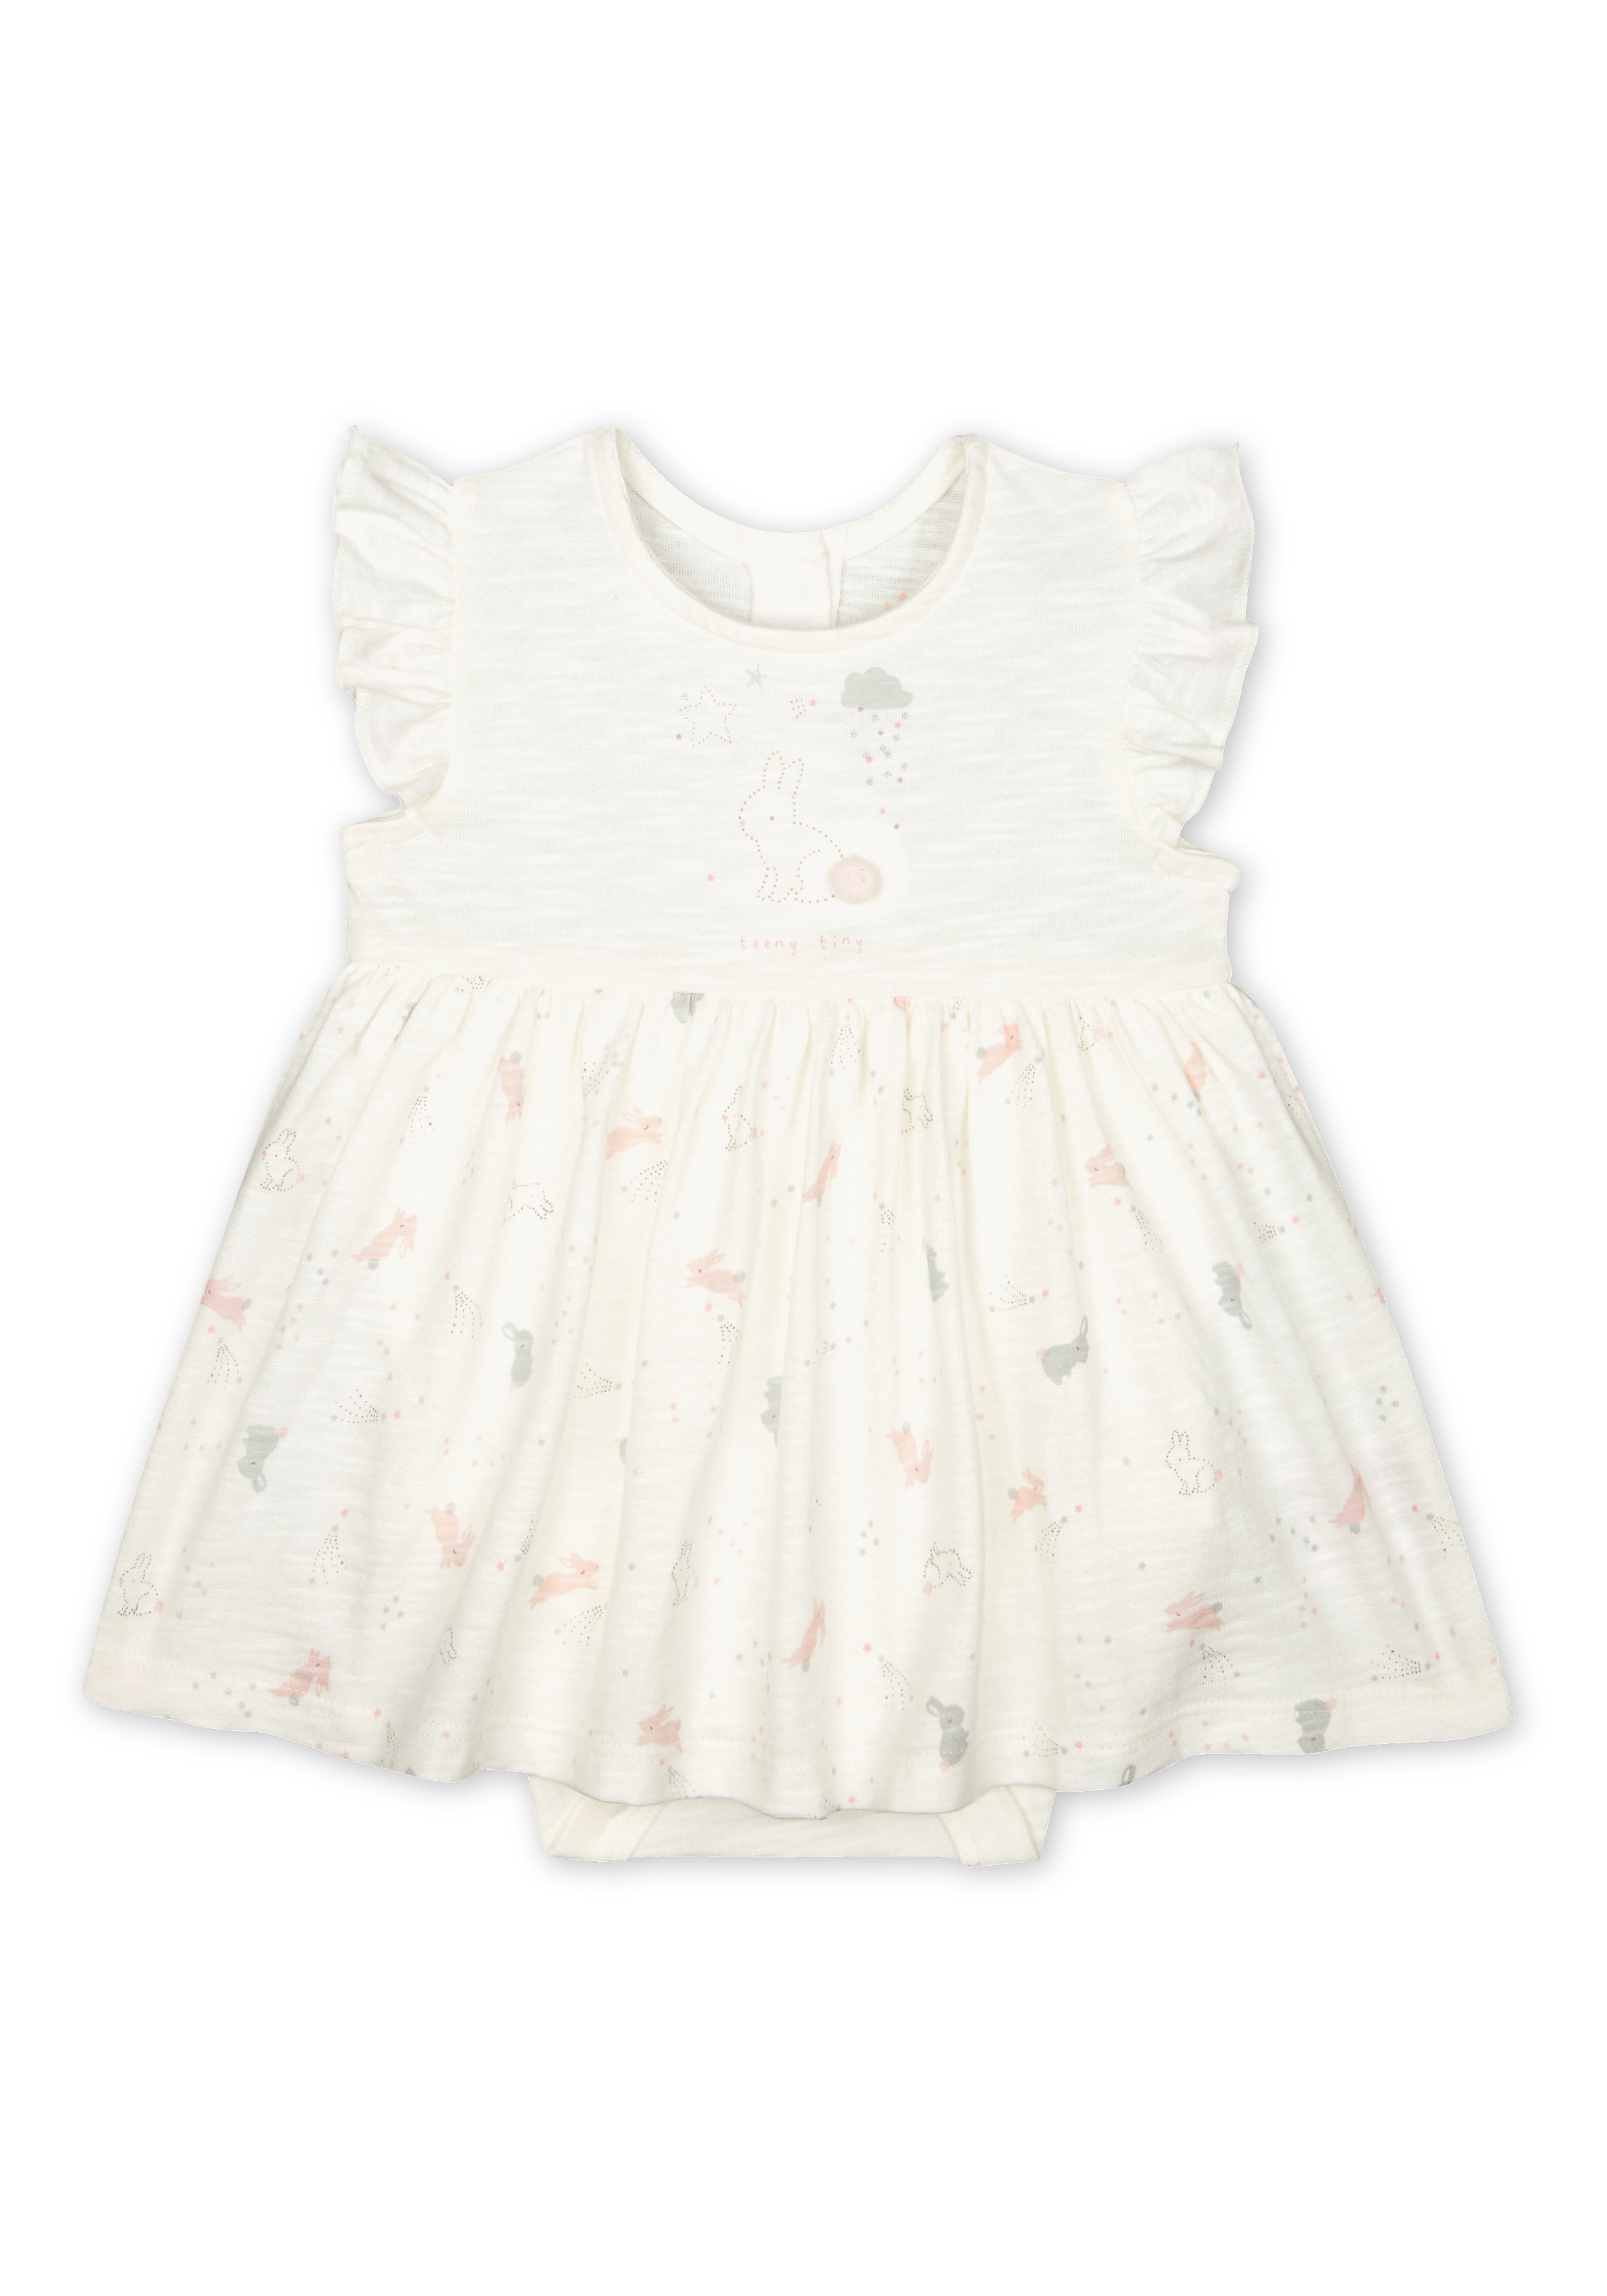 Mothercare | Girls Half Sleeves Romper Dress Bunny Print - White